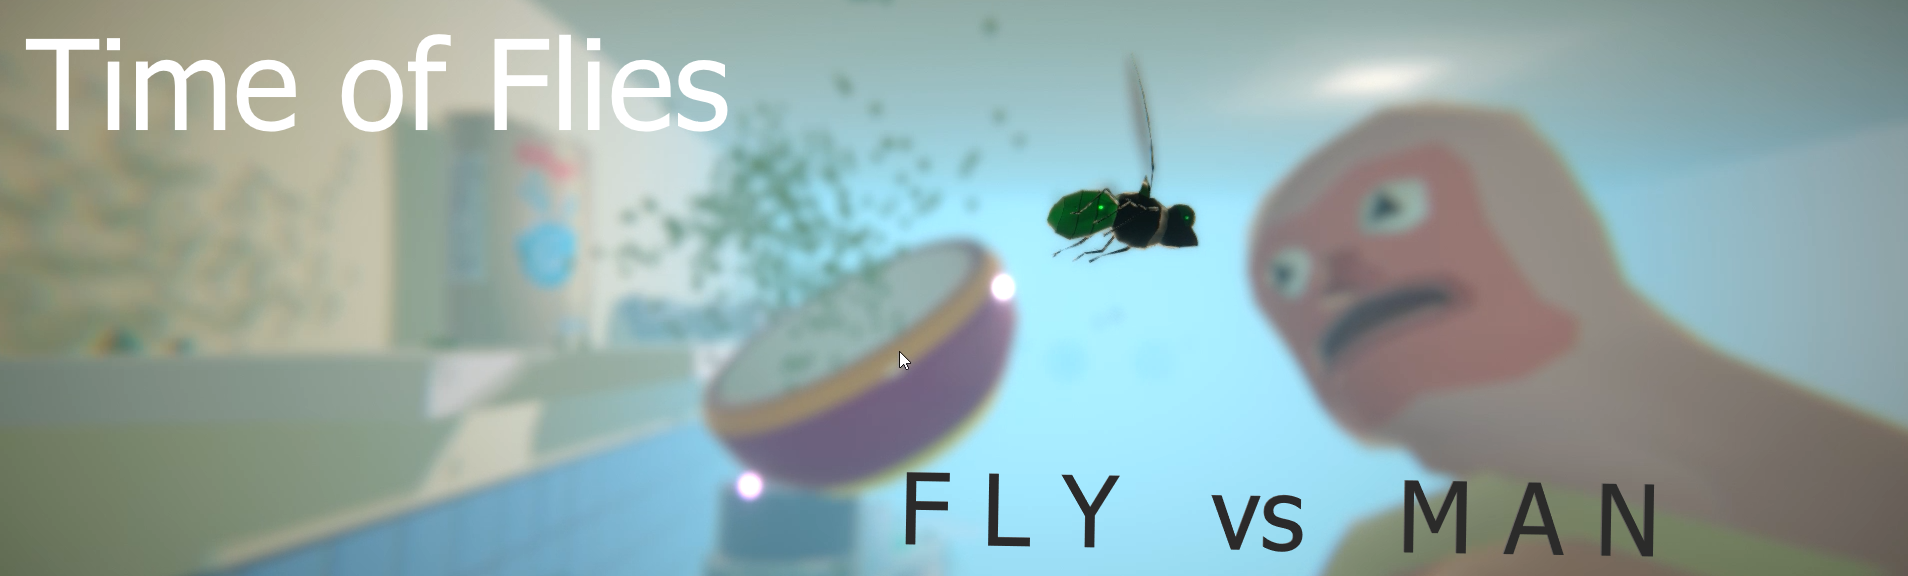 Time of Flies